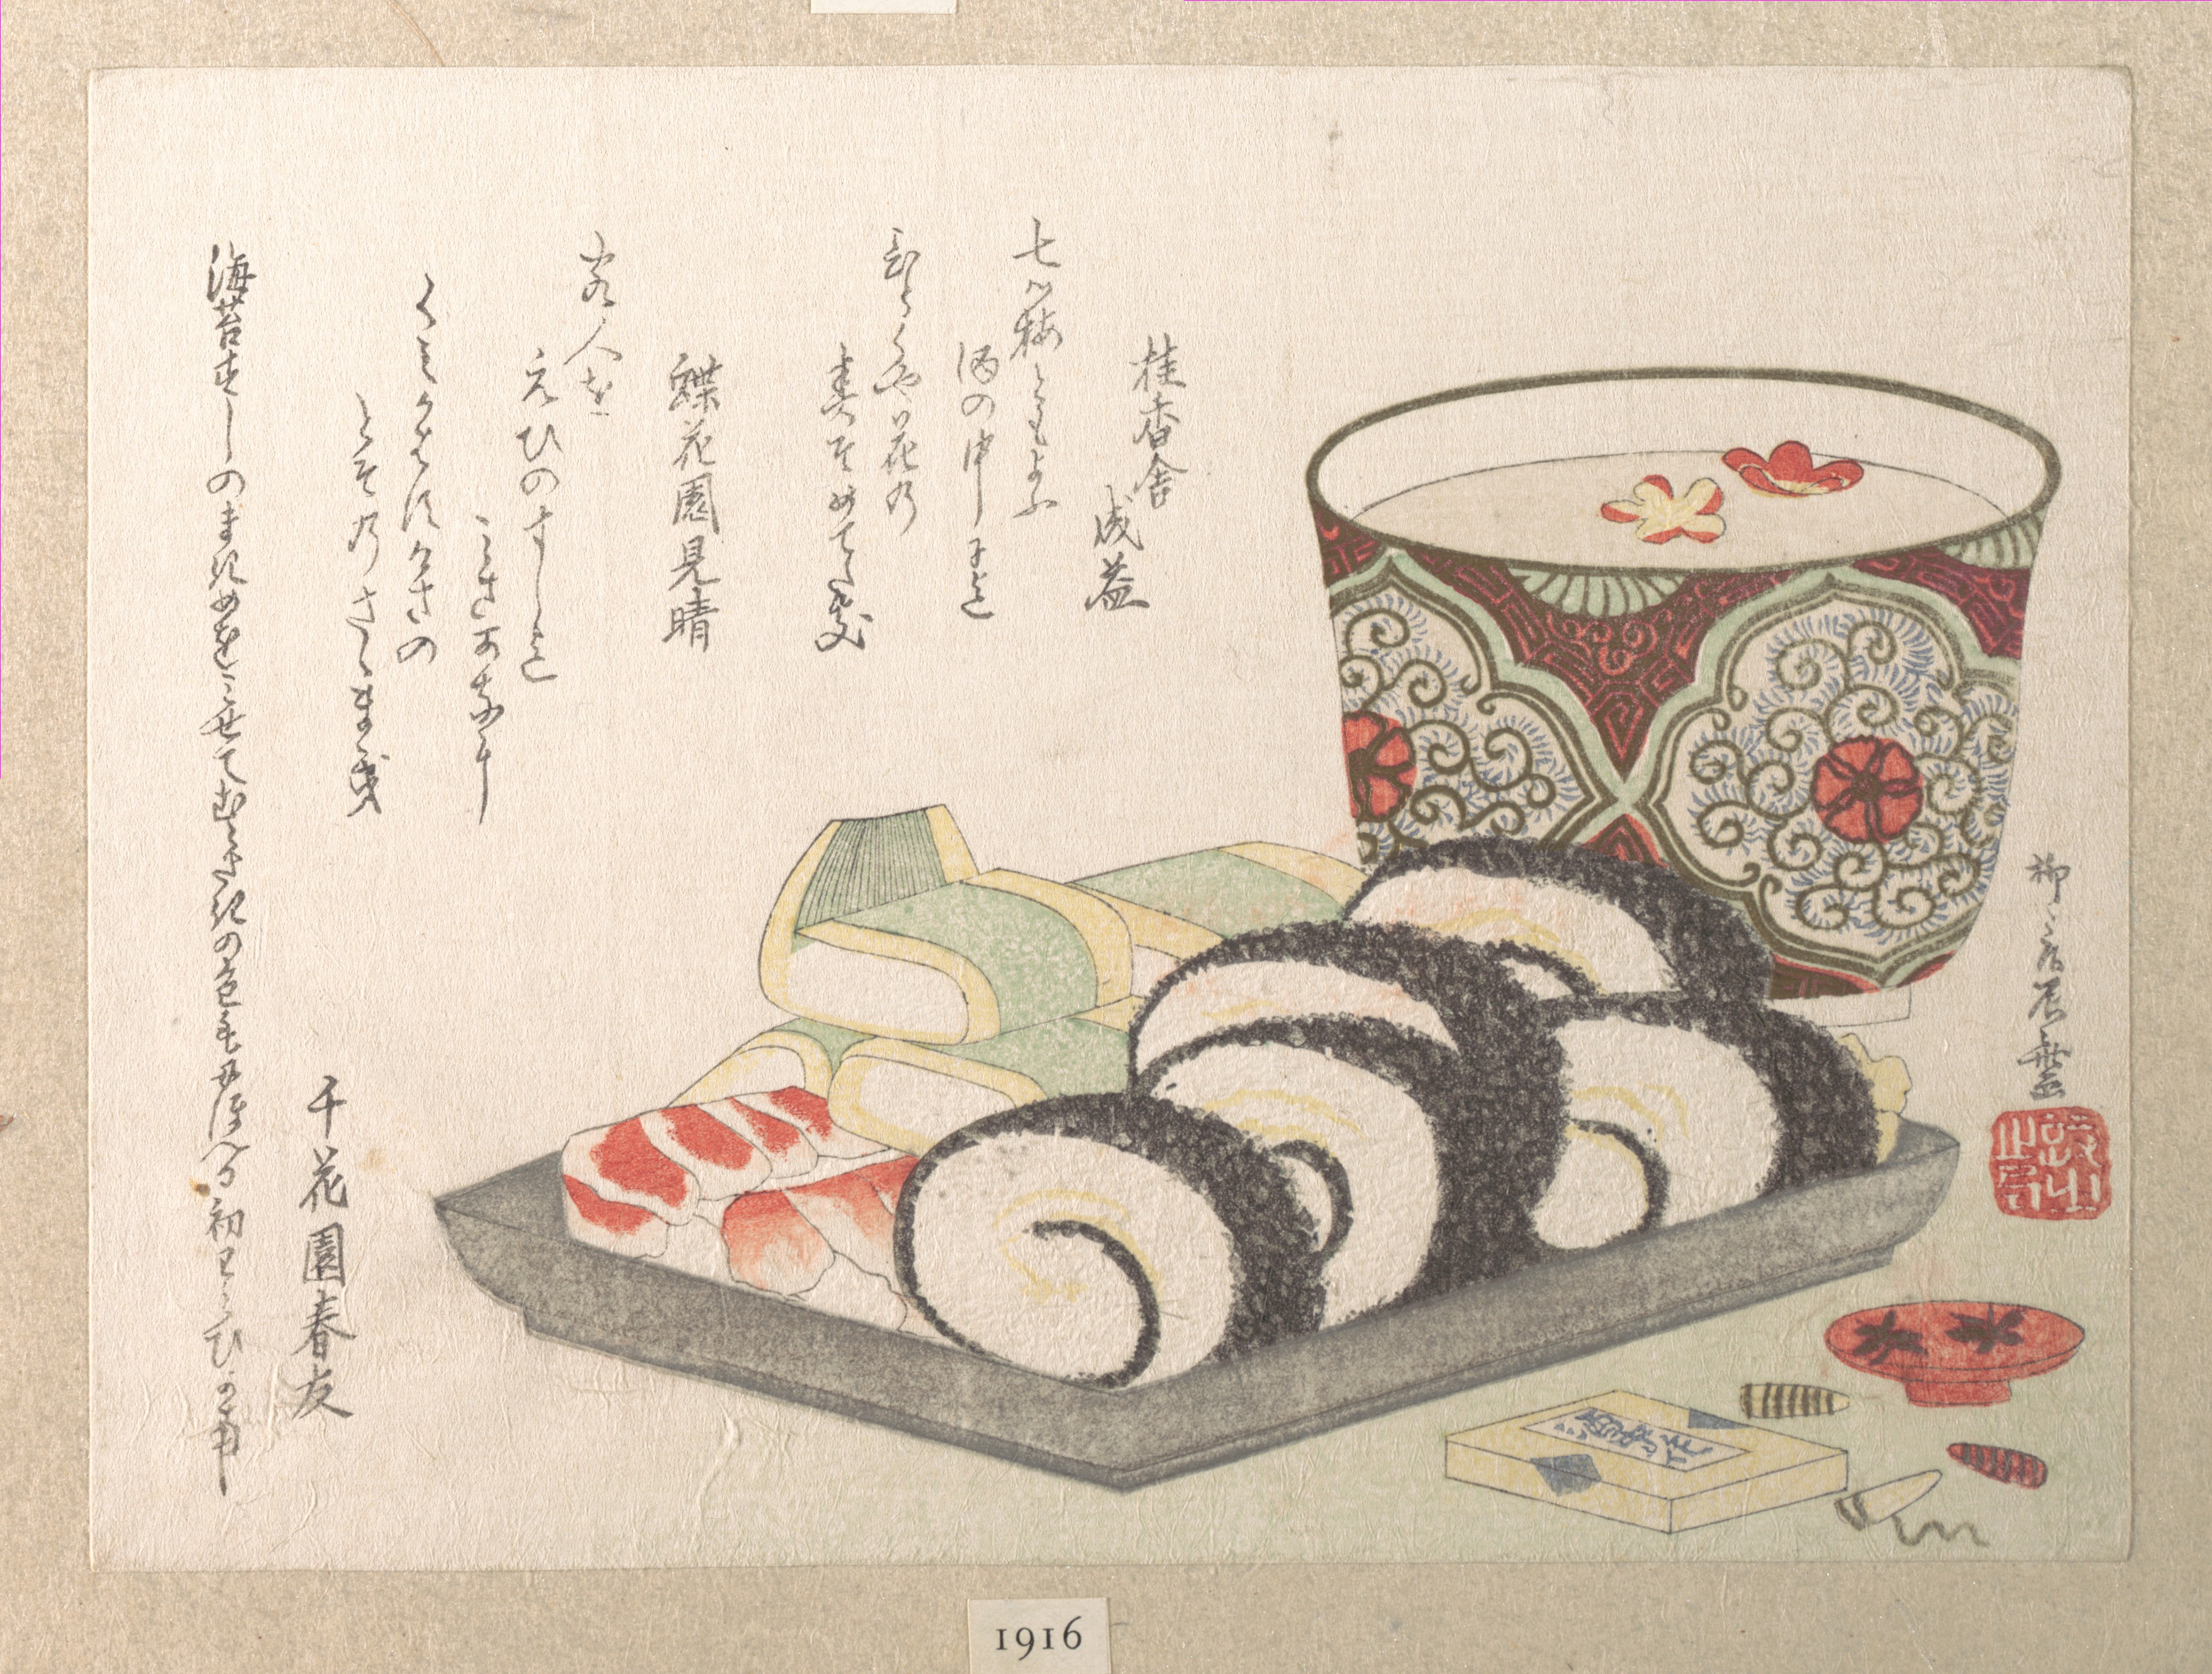 Sushi and New Year’s Sake by Ryūryūkyo Shinsai - c. 1810 - 13.3 x 18.4 cm Metropolitan Museum of Art